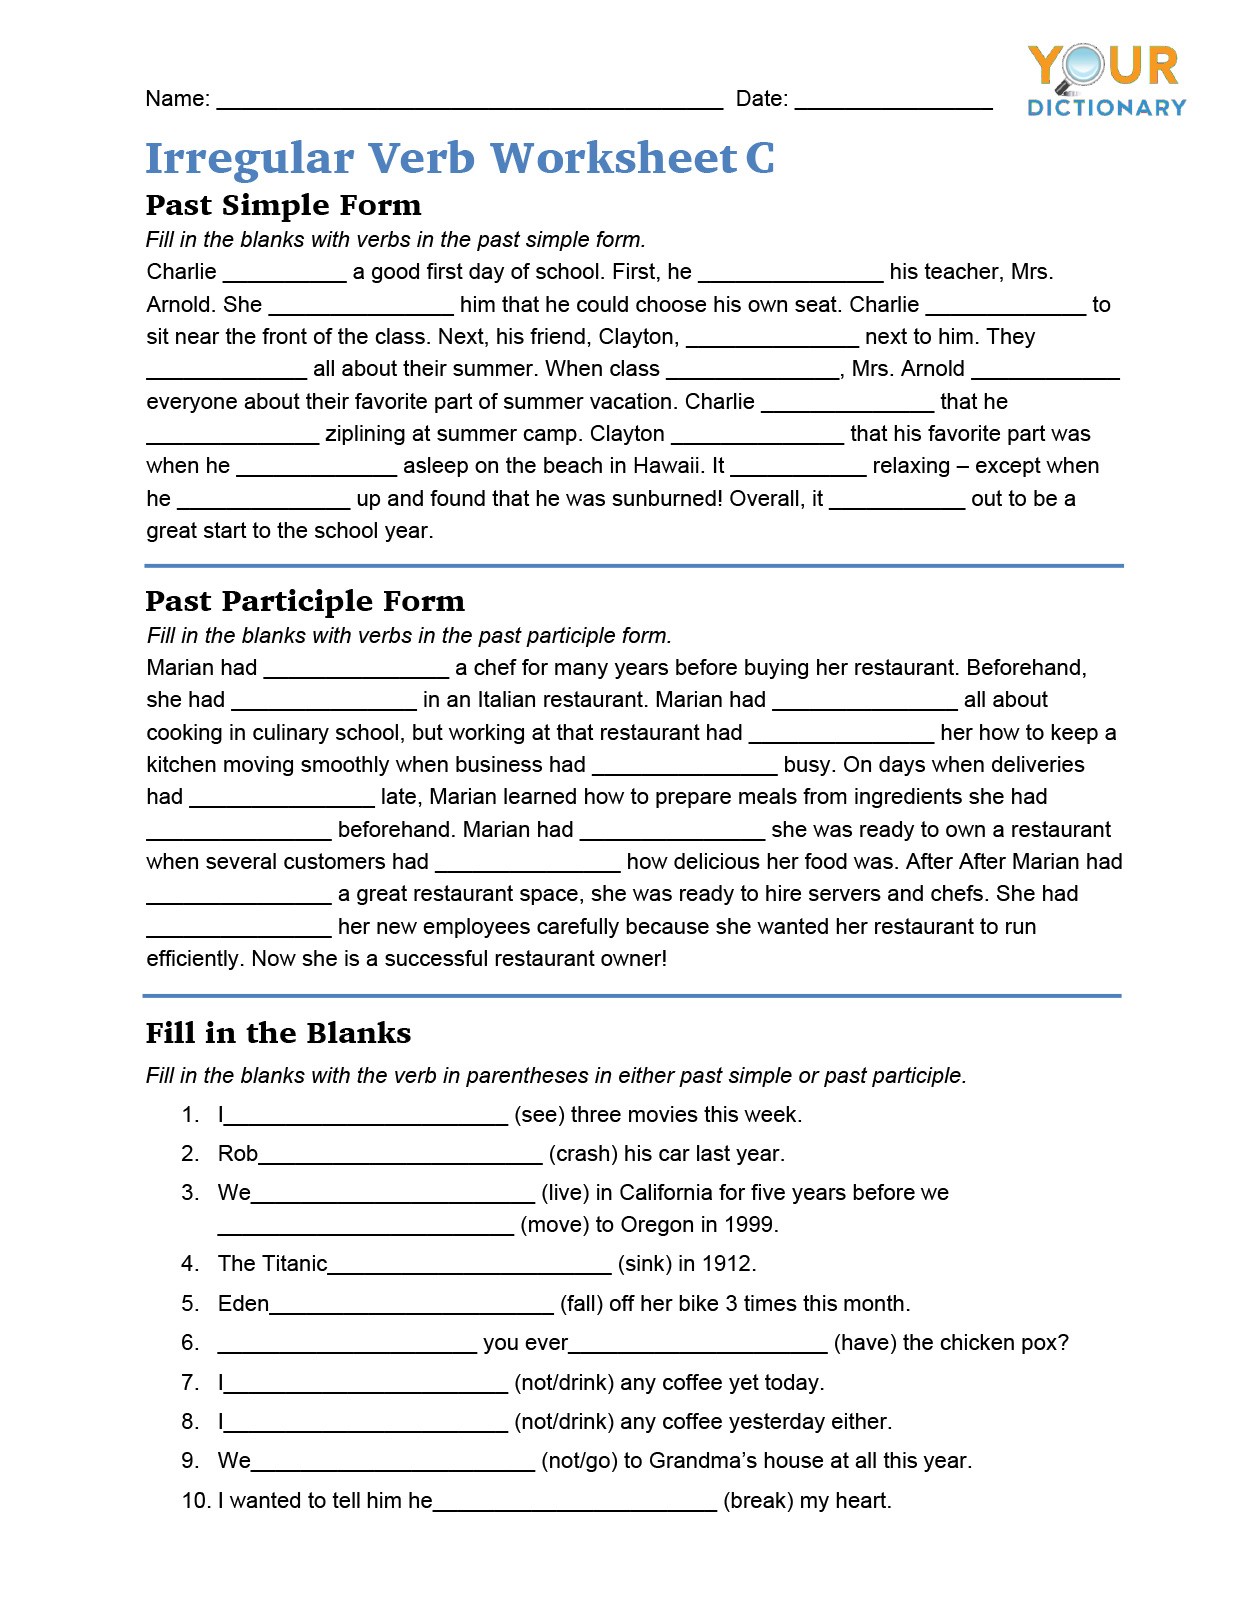 irregular-verb-worksheets